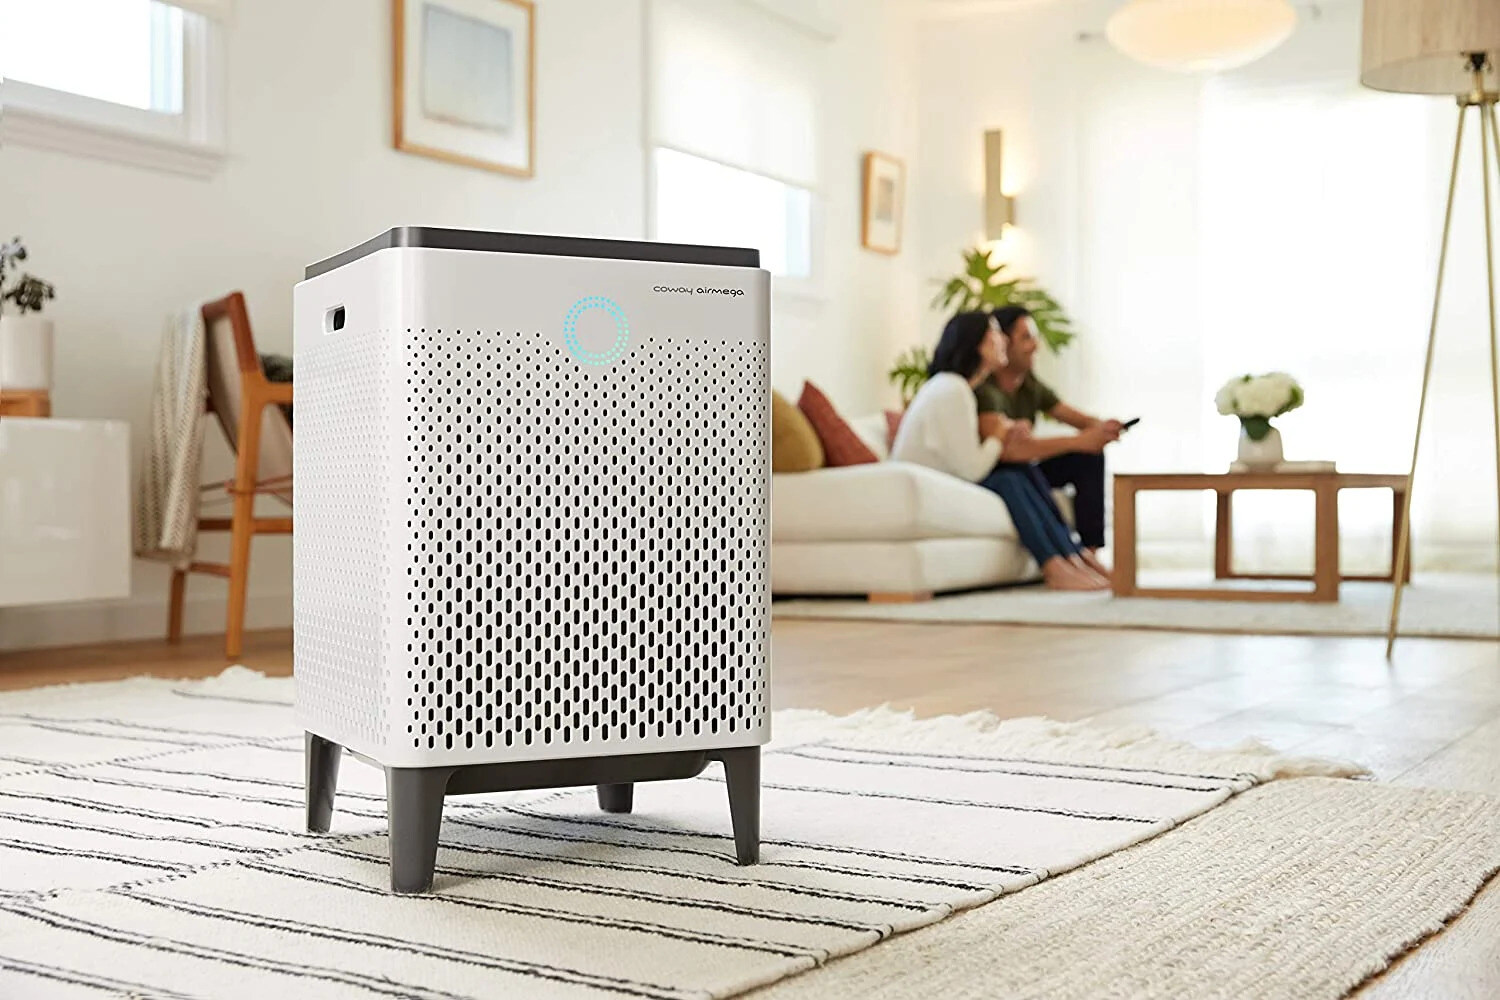 This Mini Air Purifier Allows You To Breathe Clean Air On The Go